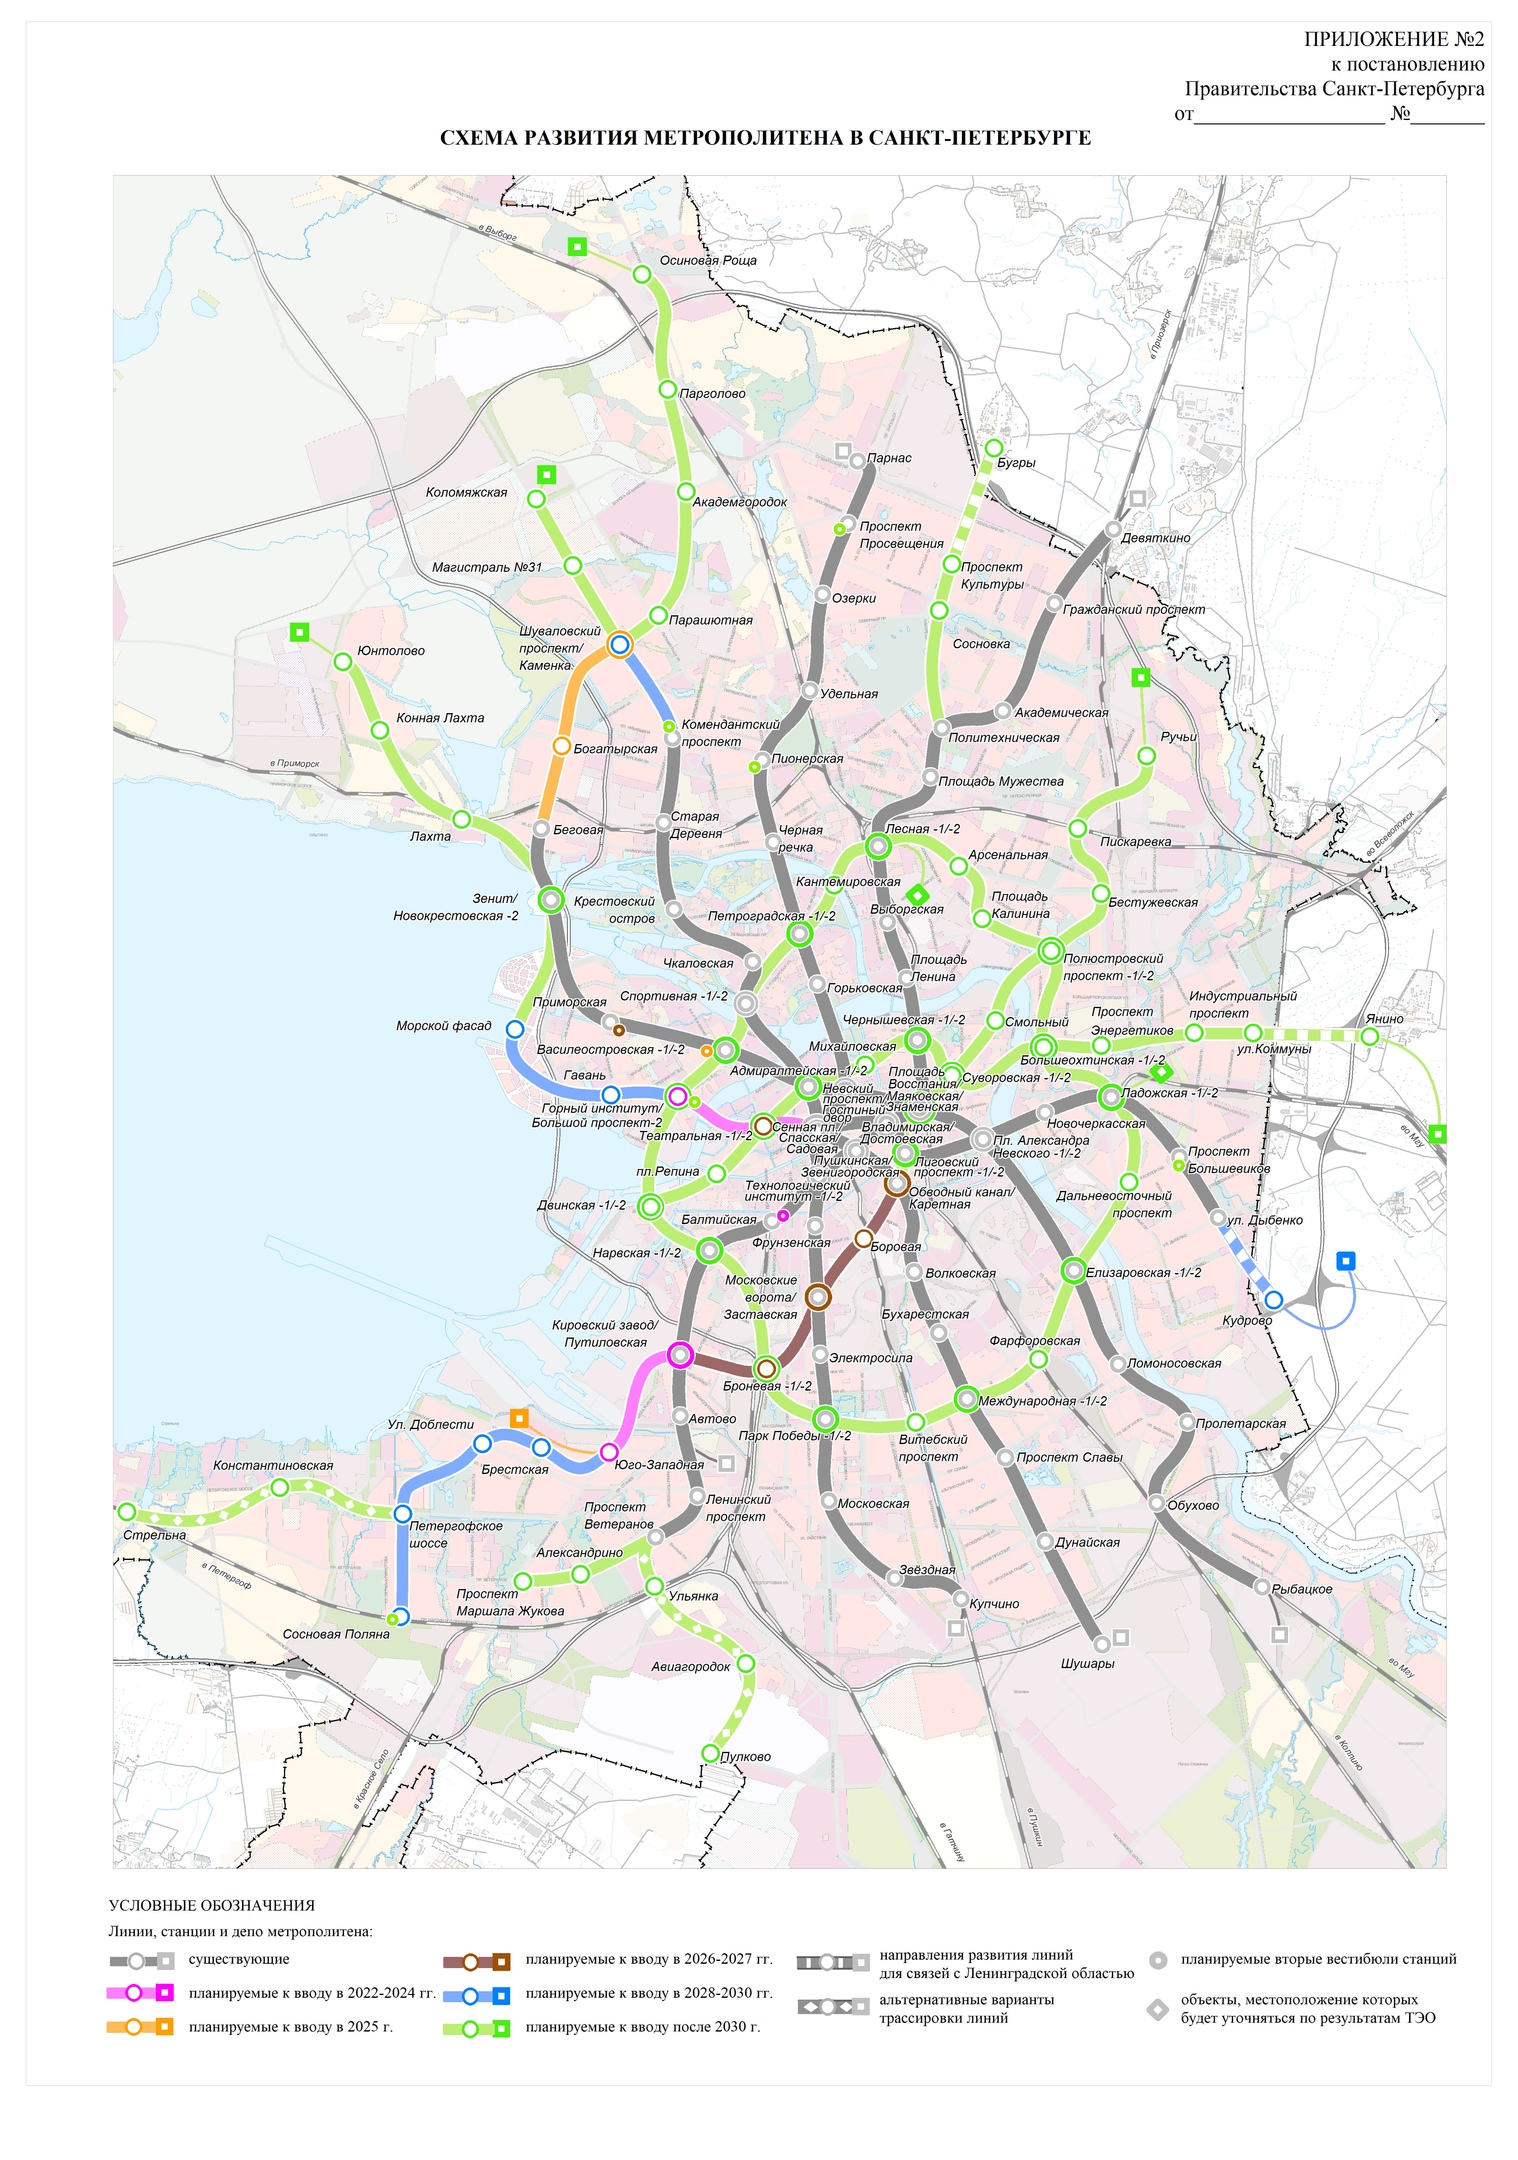 Sanktpēterburga — Metro — Maps of Projects